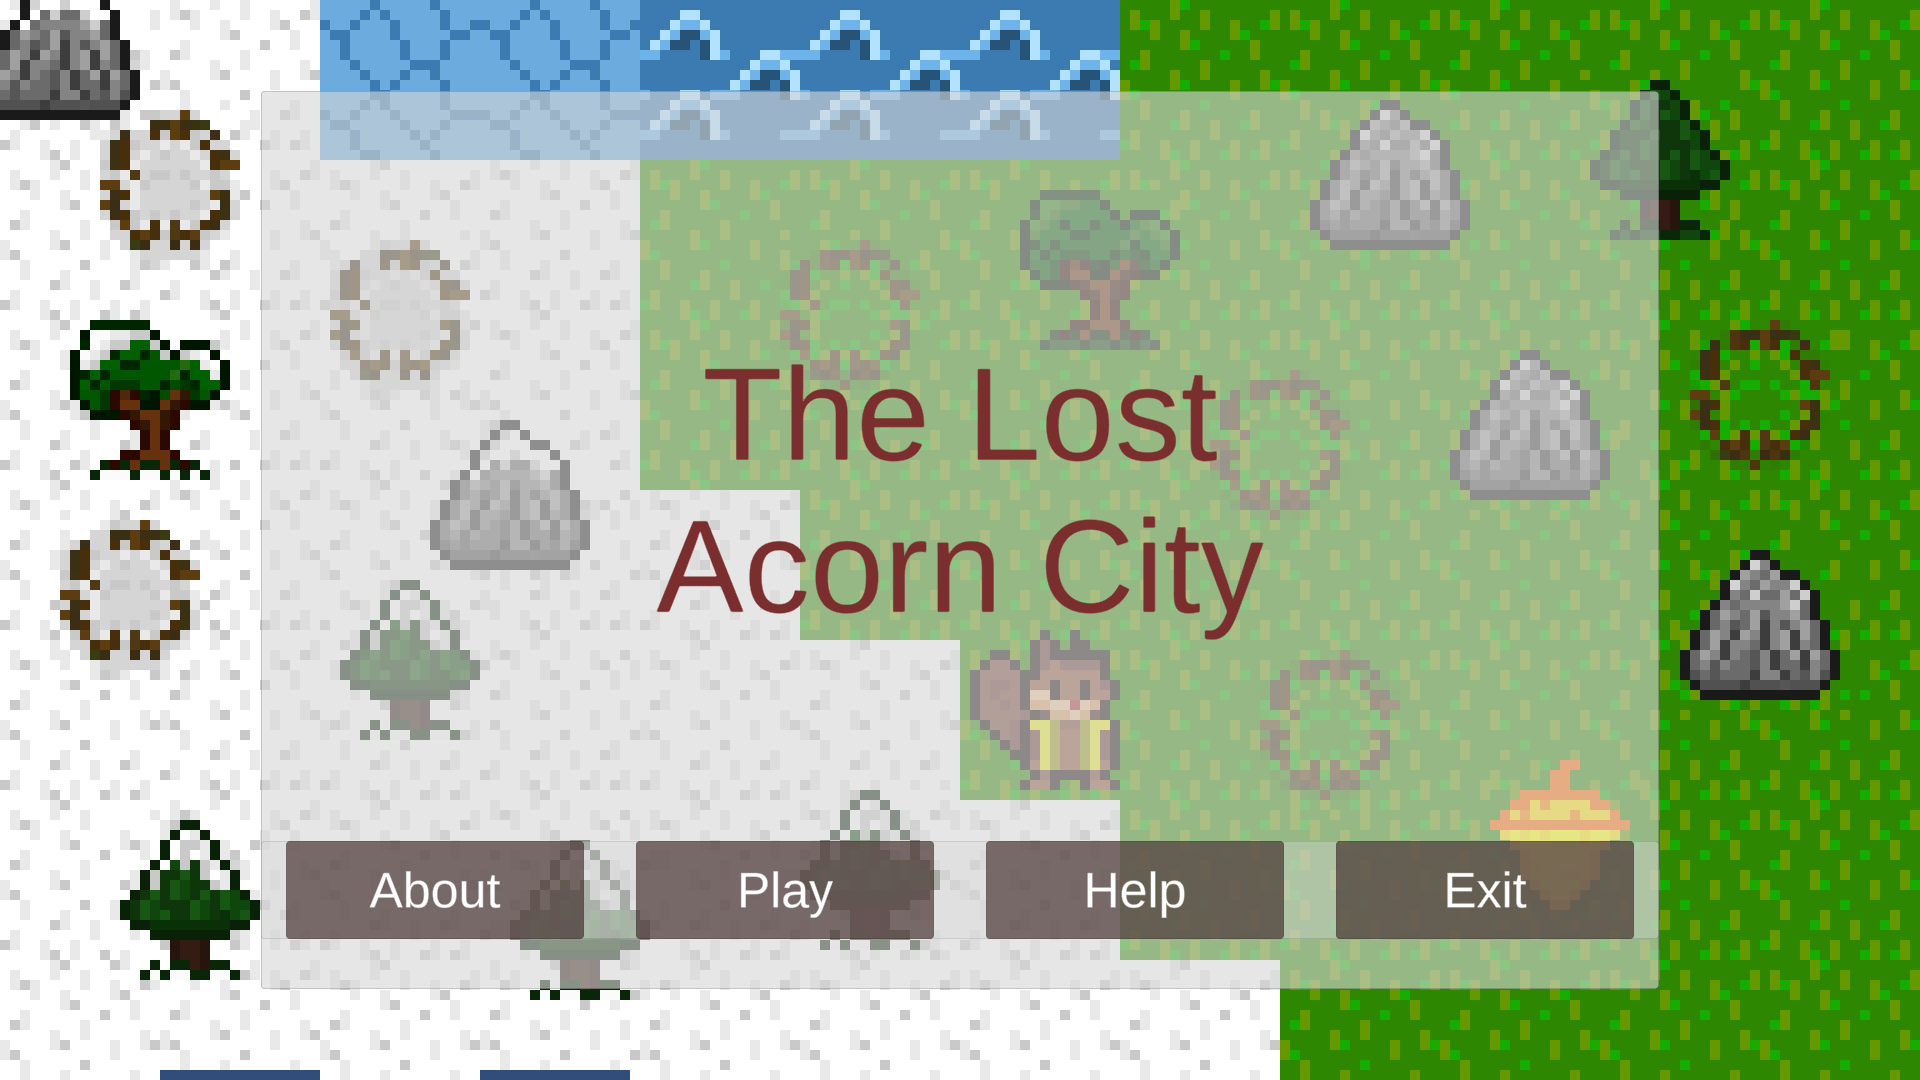 The Lost Acorn City